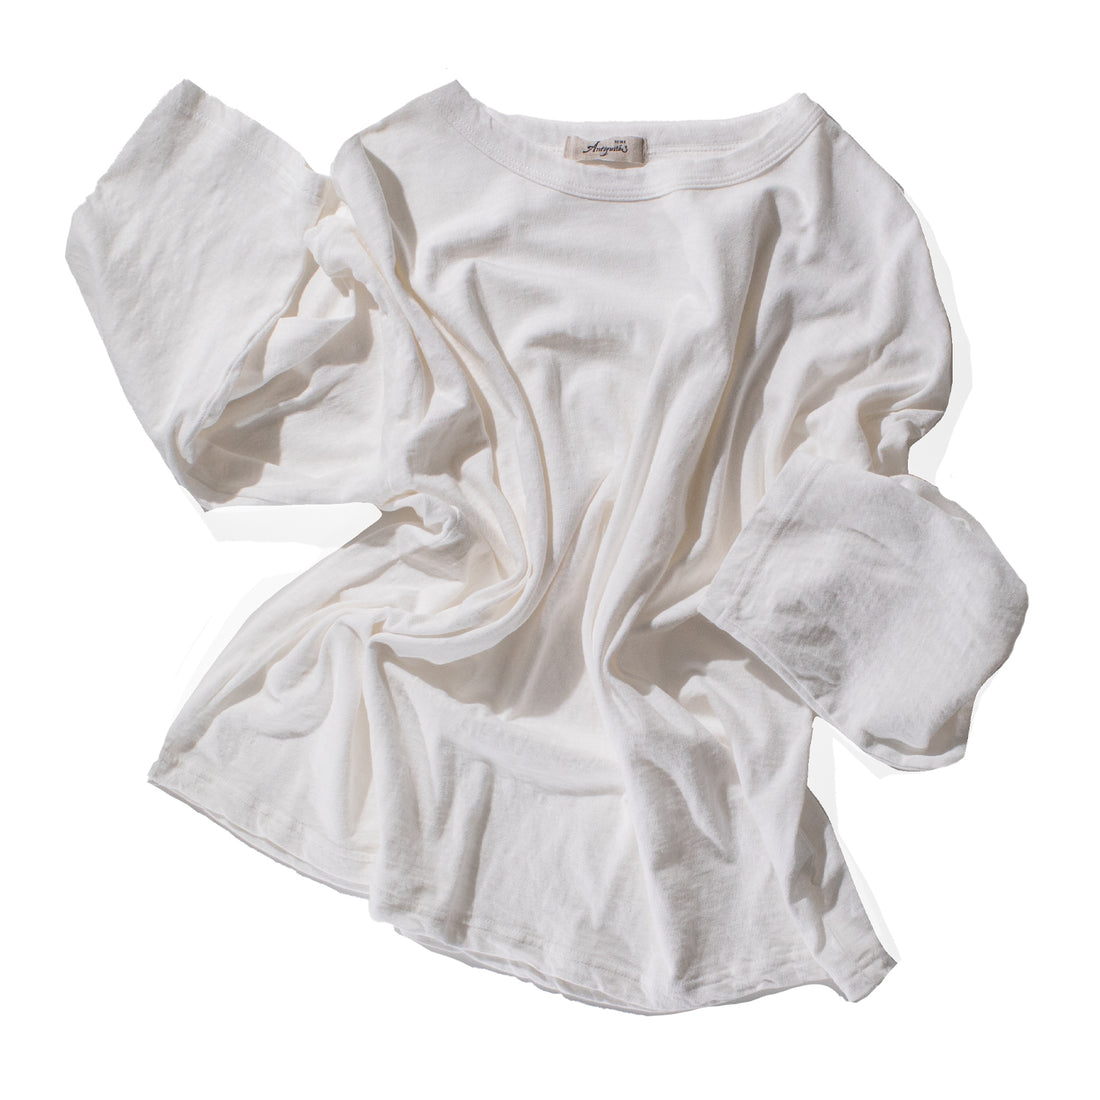 Ichi Antiquités Cotton Pullover in White